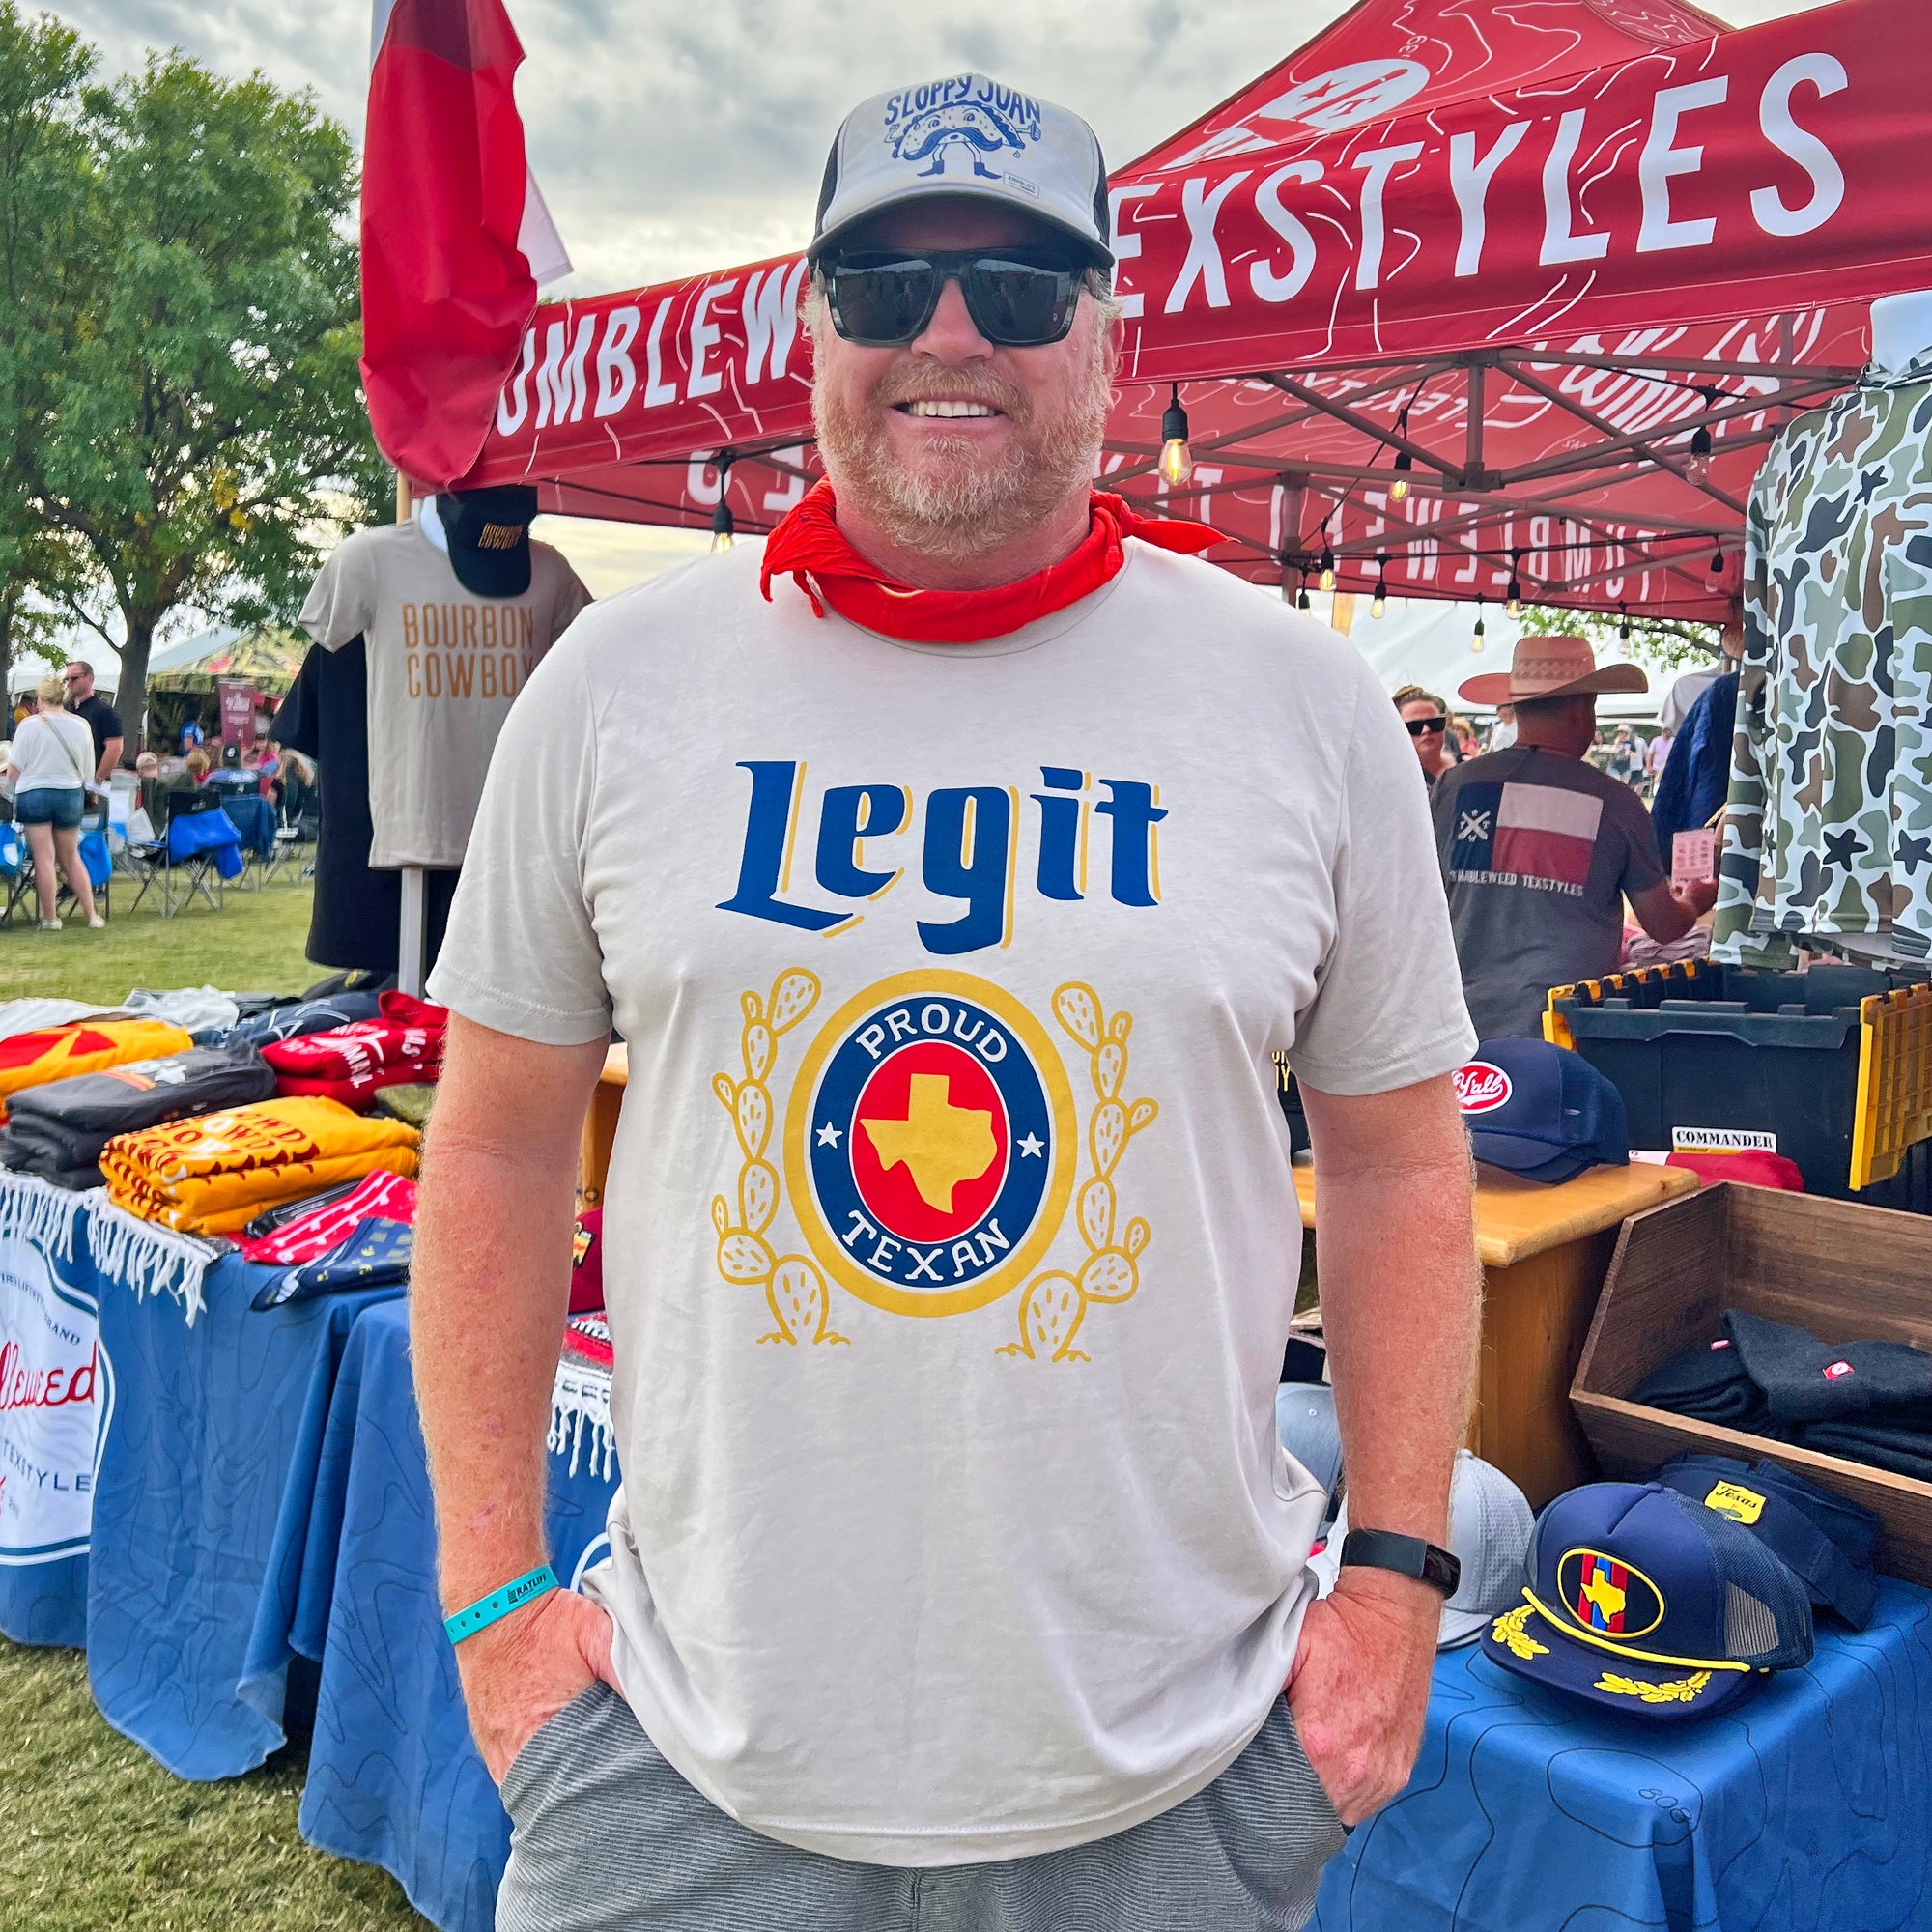 Legit Proud Texan T-Shirt